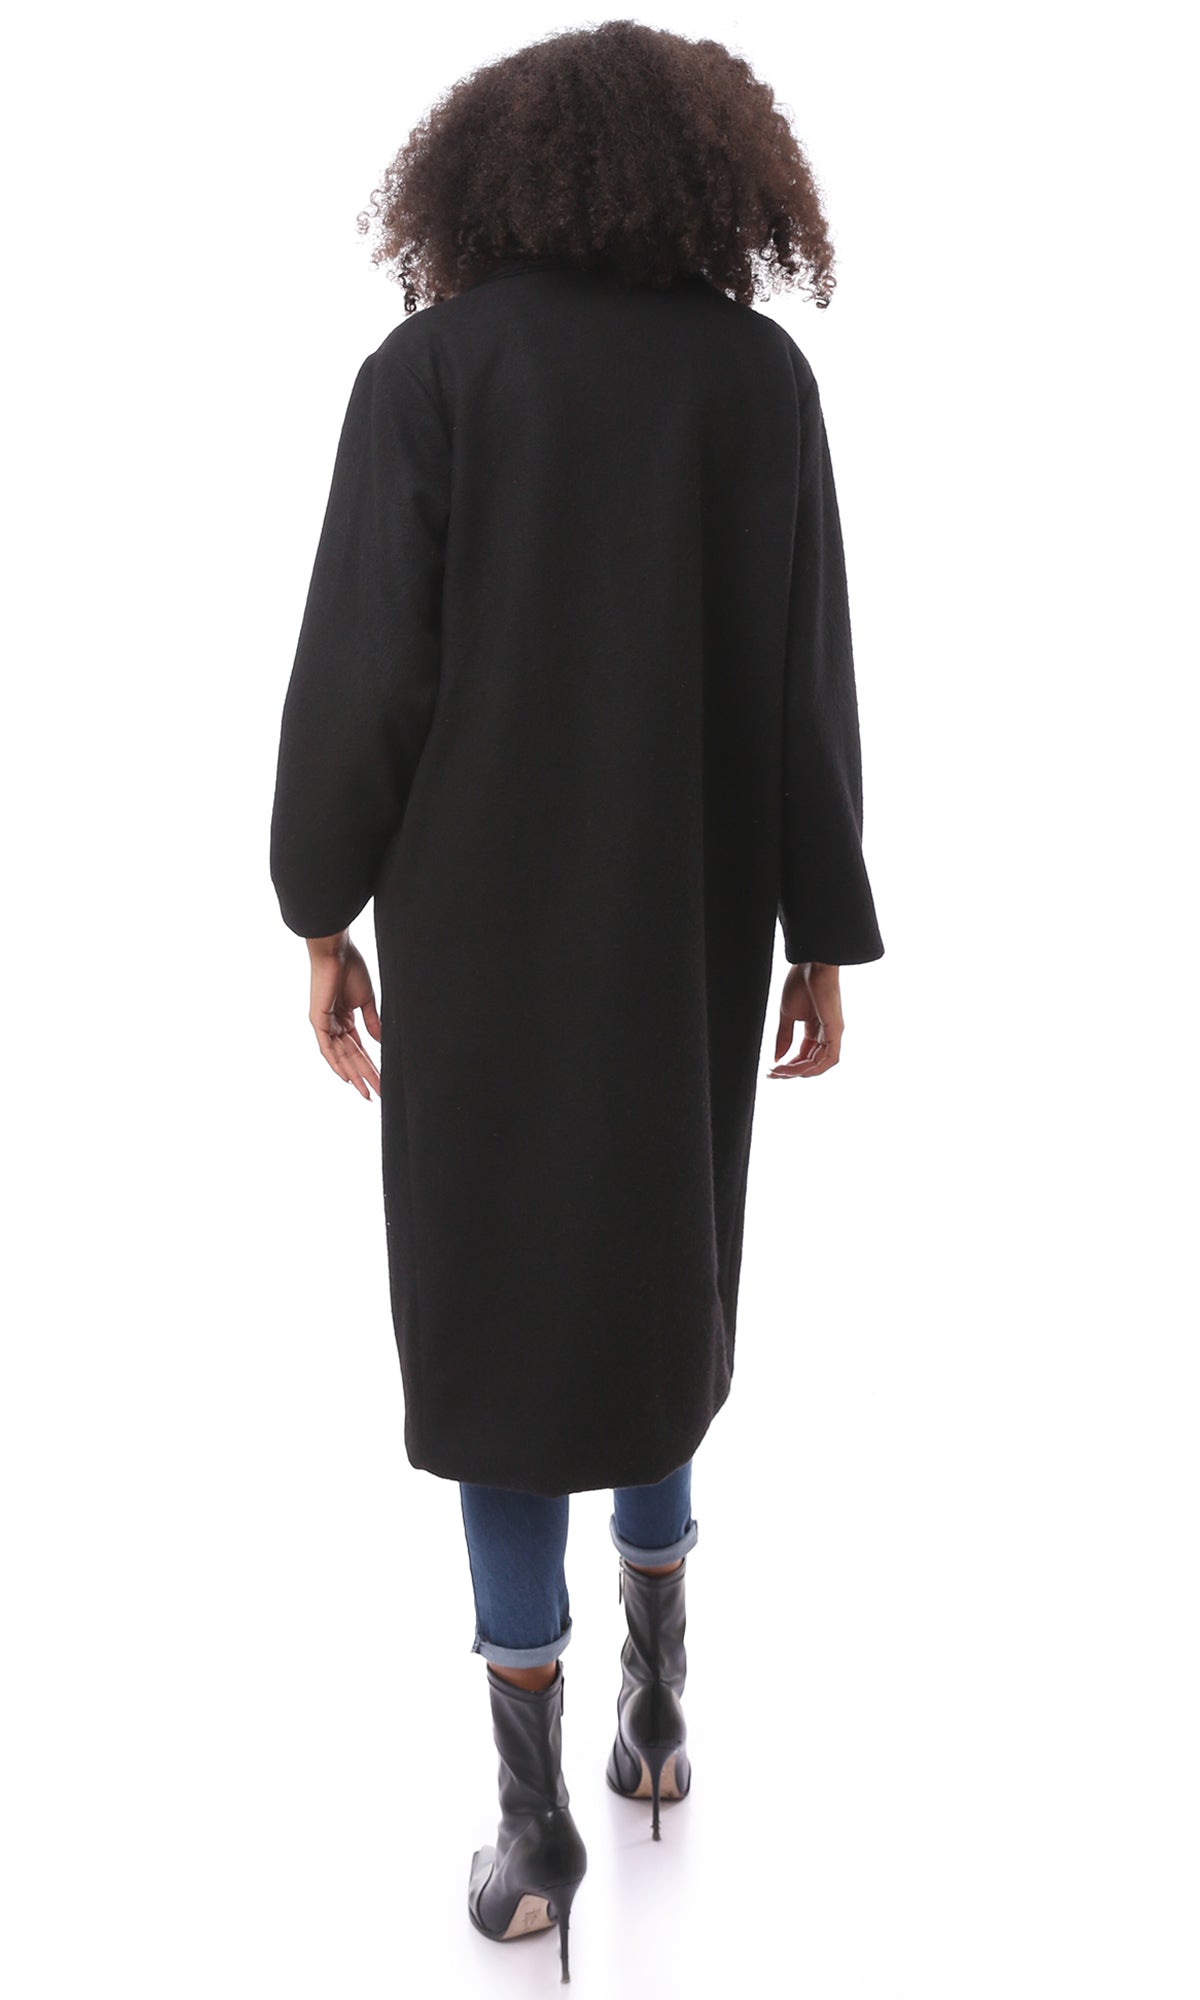 O174173 Long Sleeves Solid Black Gokh Coat